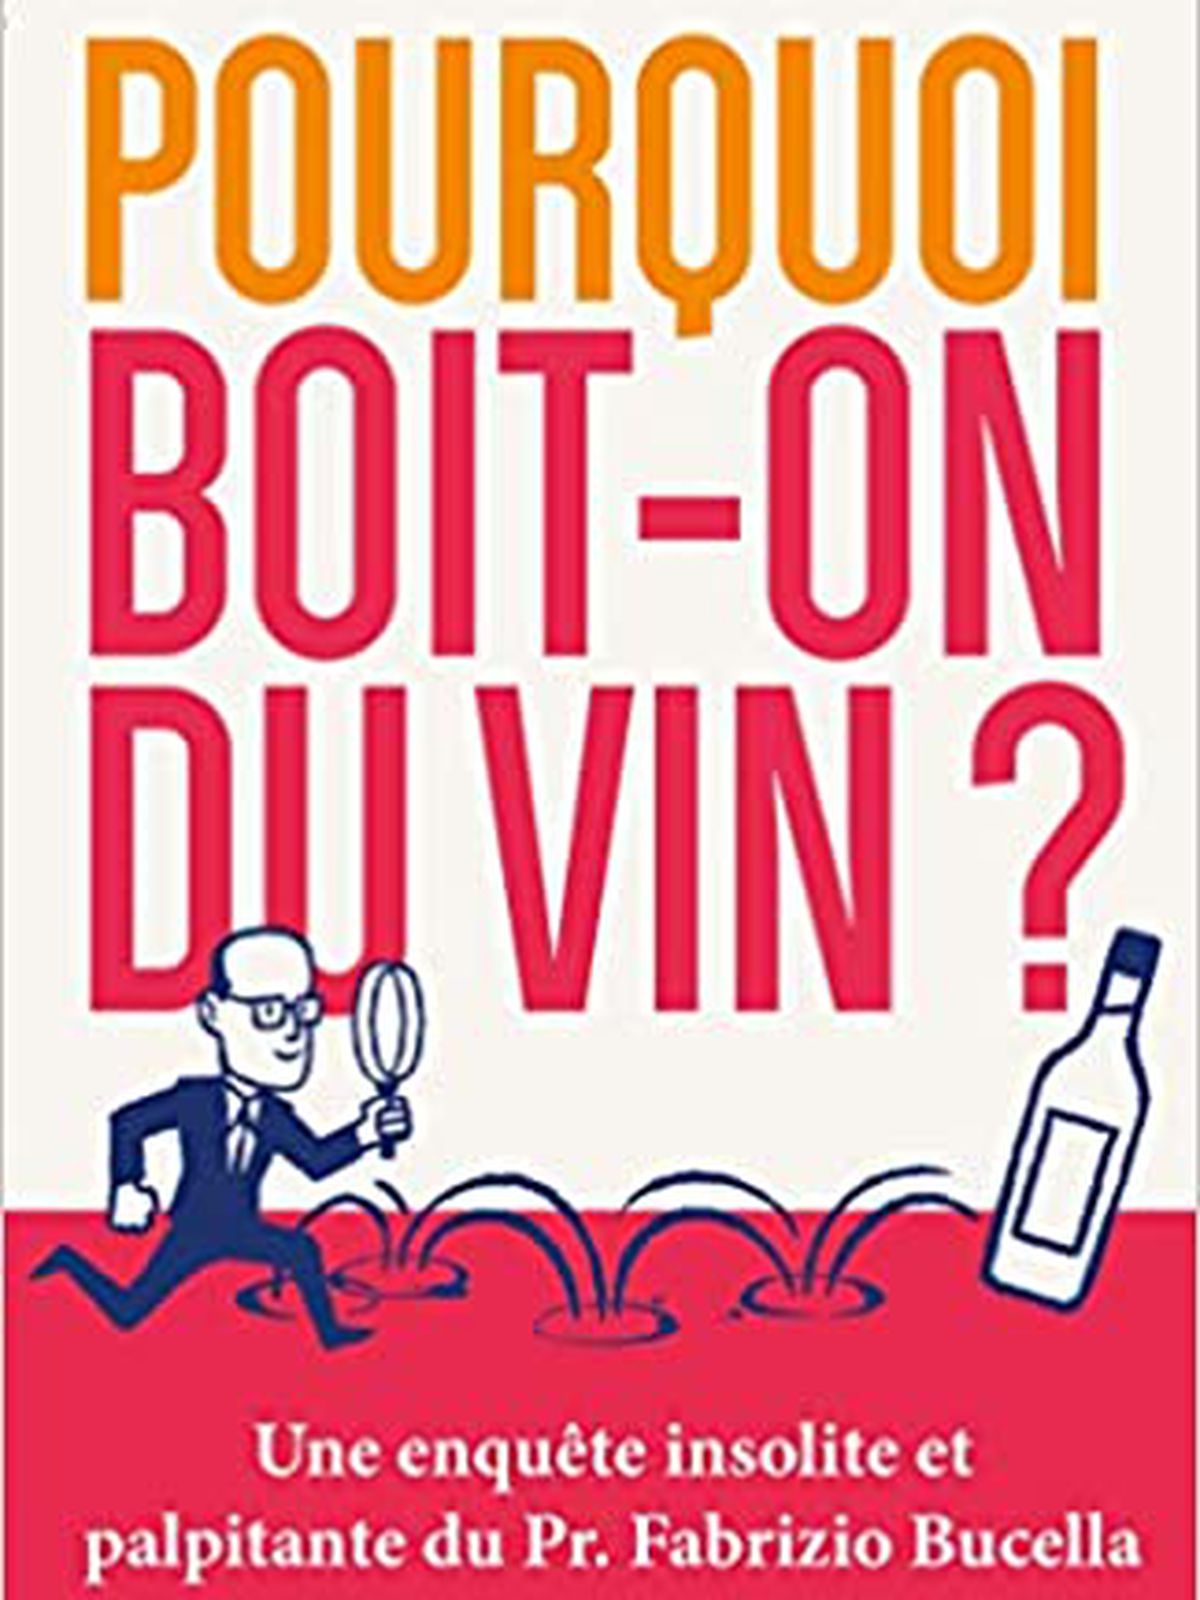 A book cover for “Pourquoi boit-on du vin?”